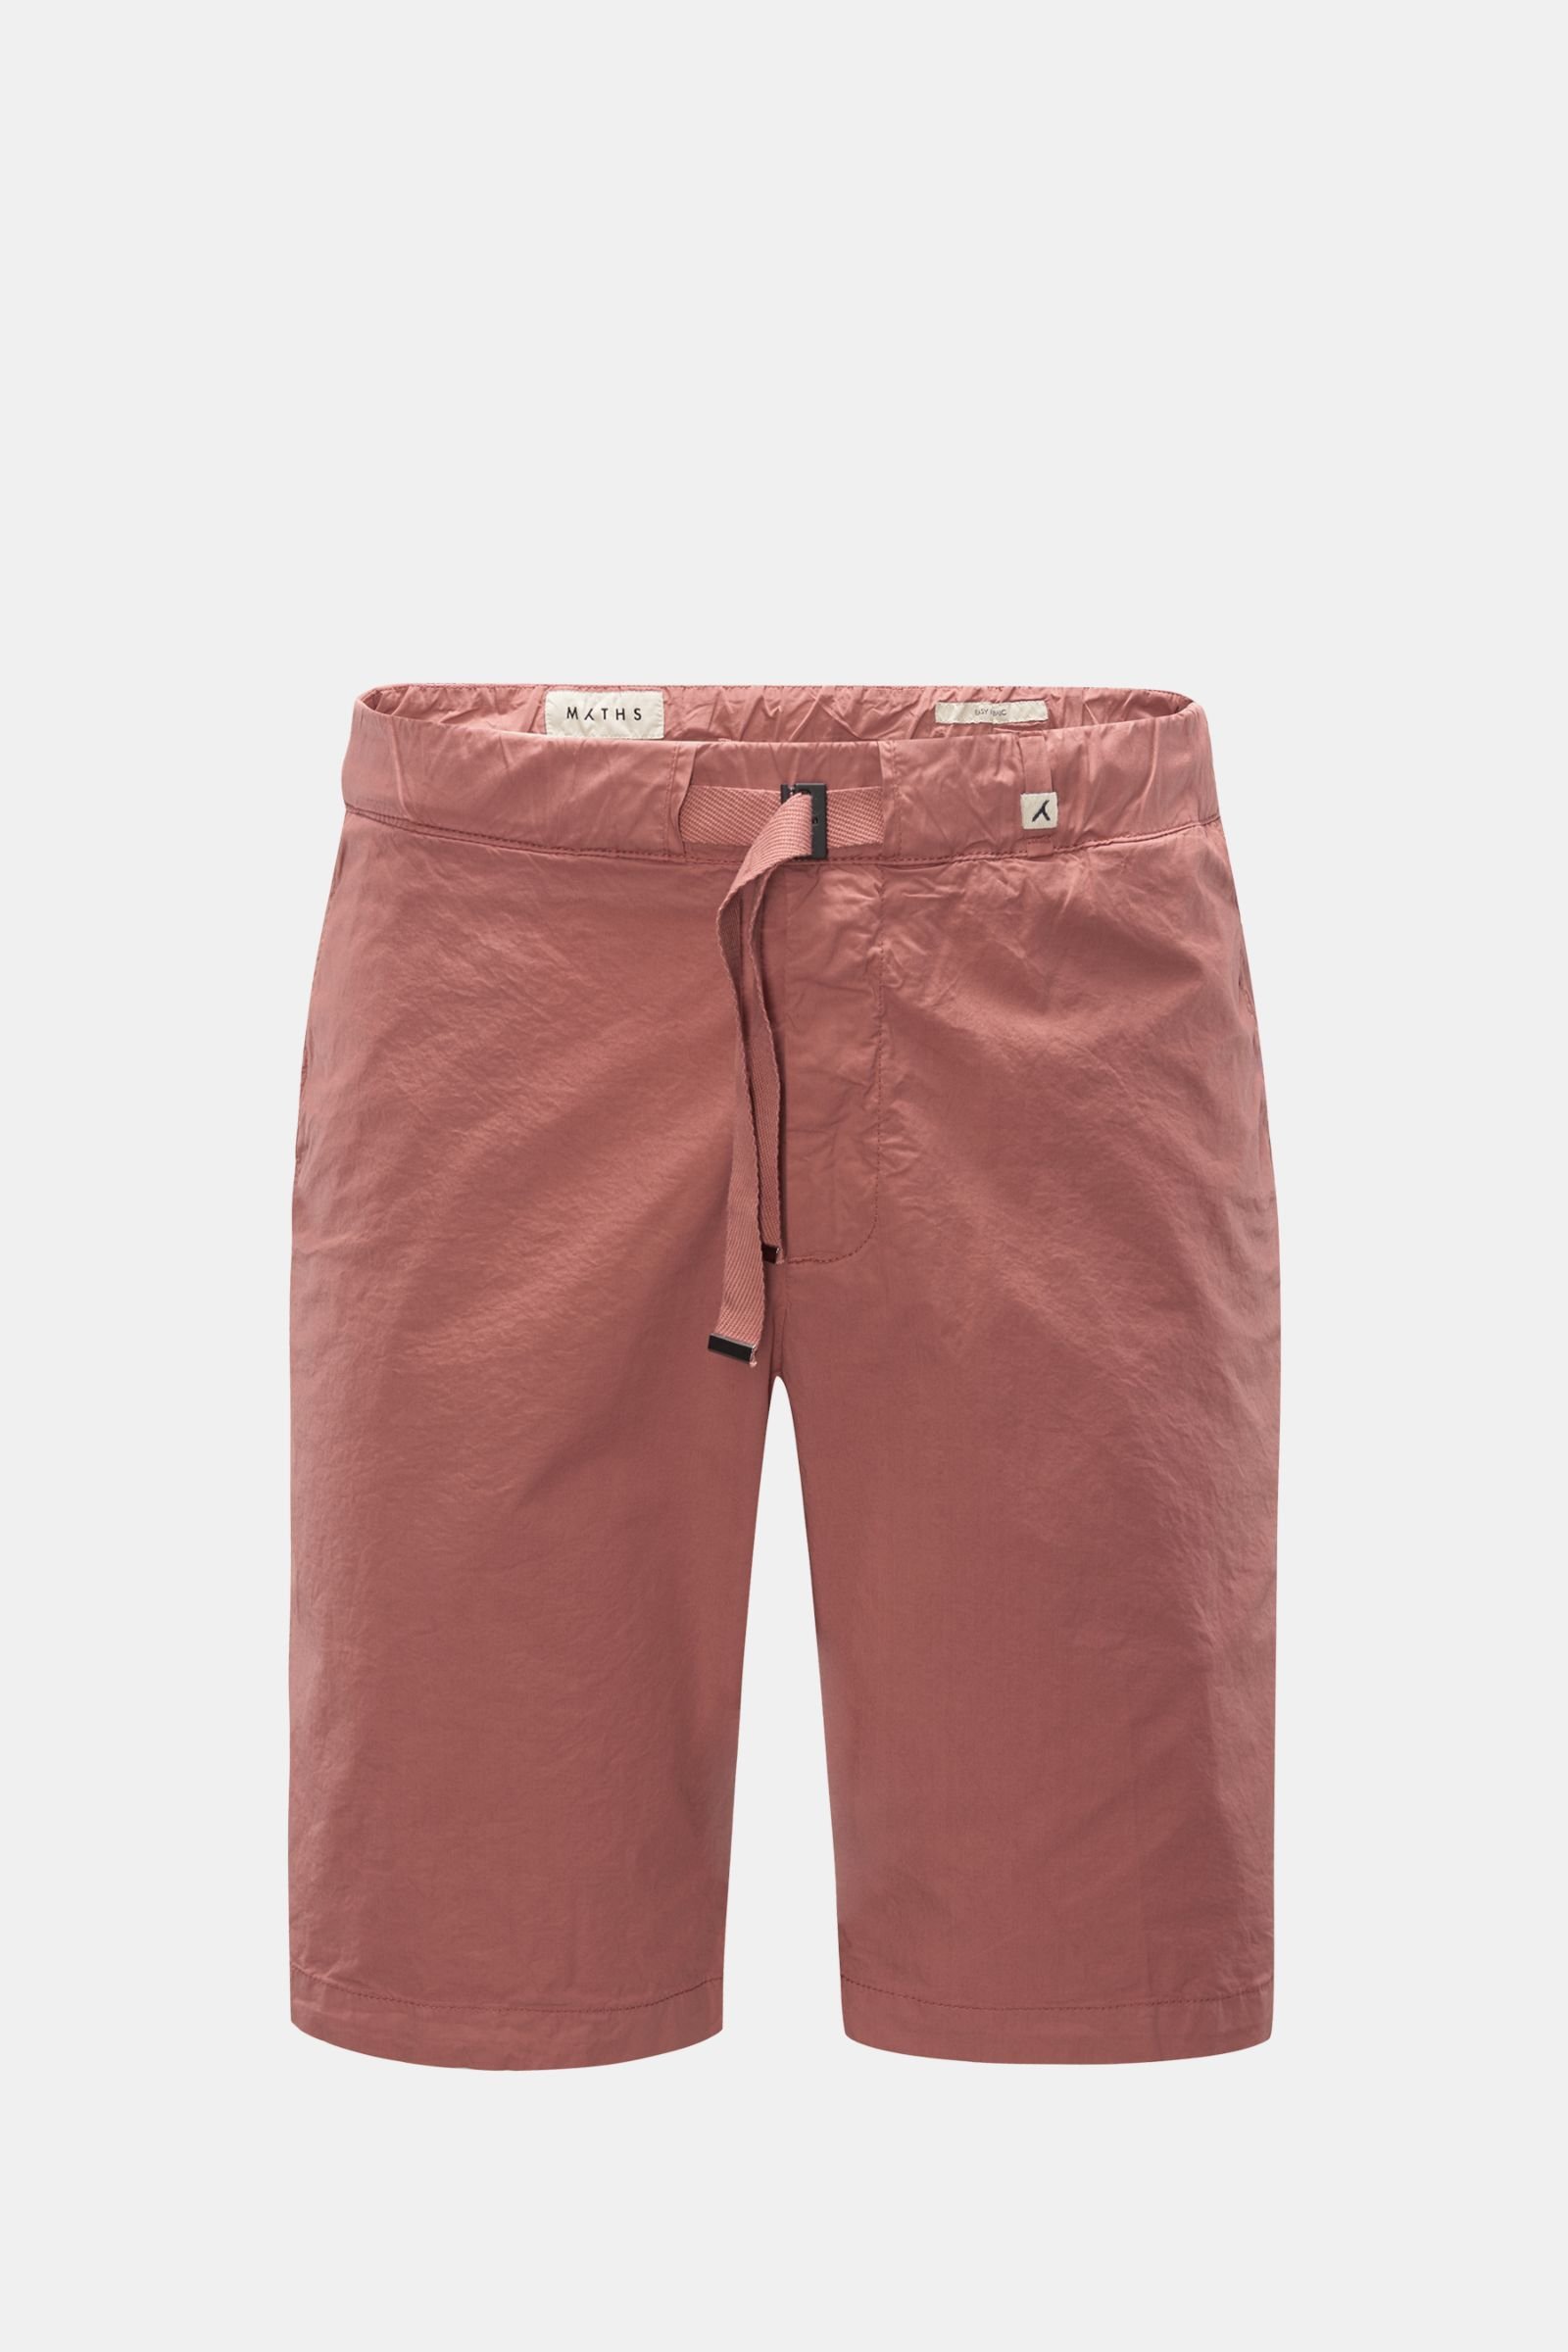 Shorts antique pink